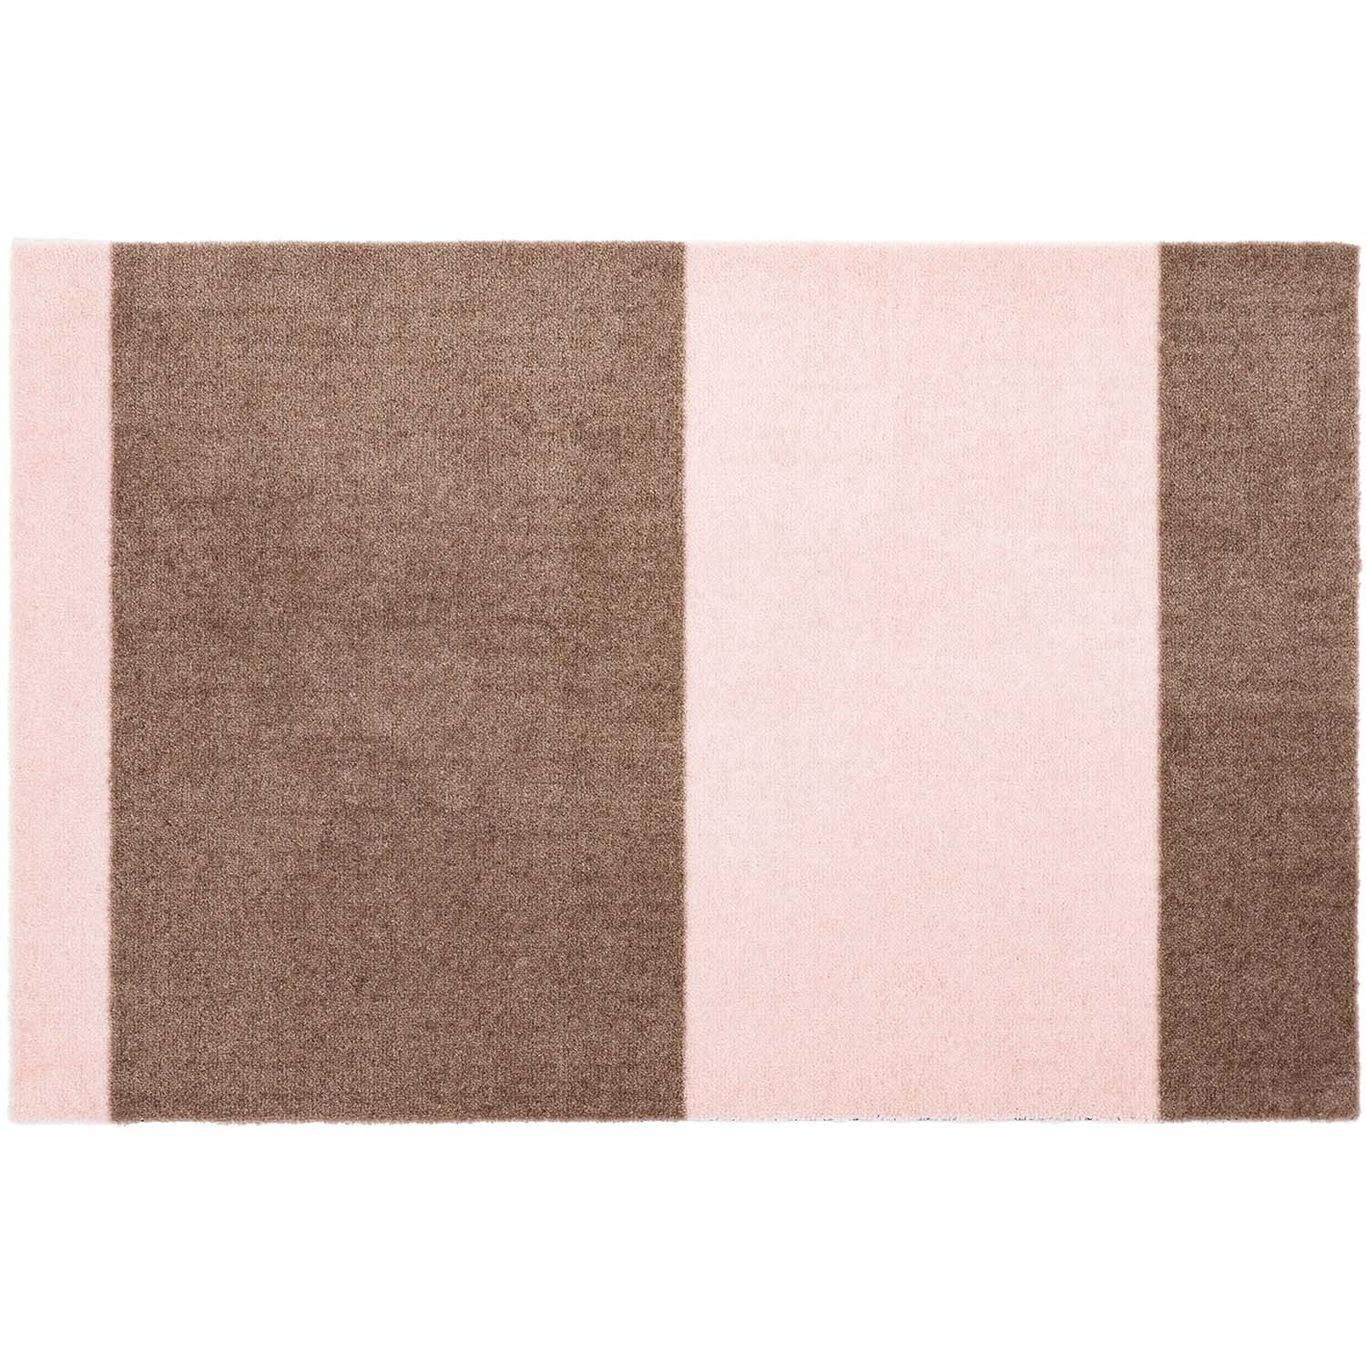 Stripes Teppich Sandfarben/Light Rose, 60x90 cm